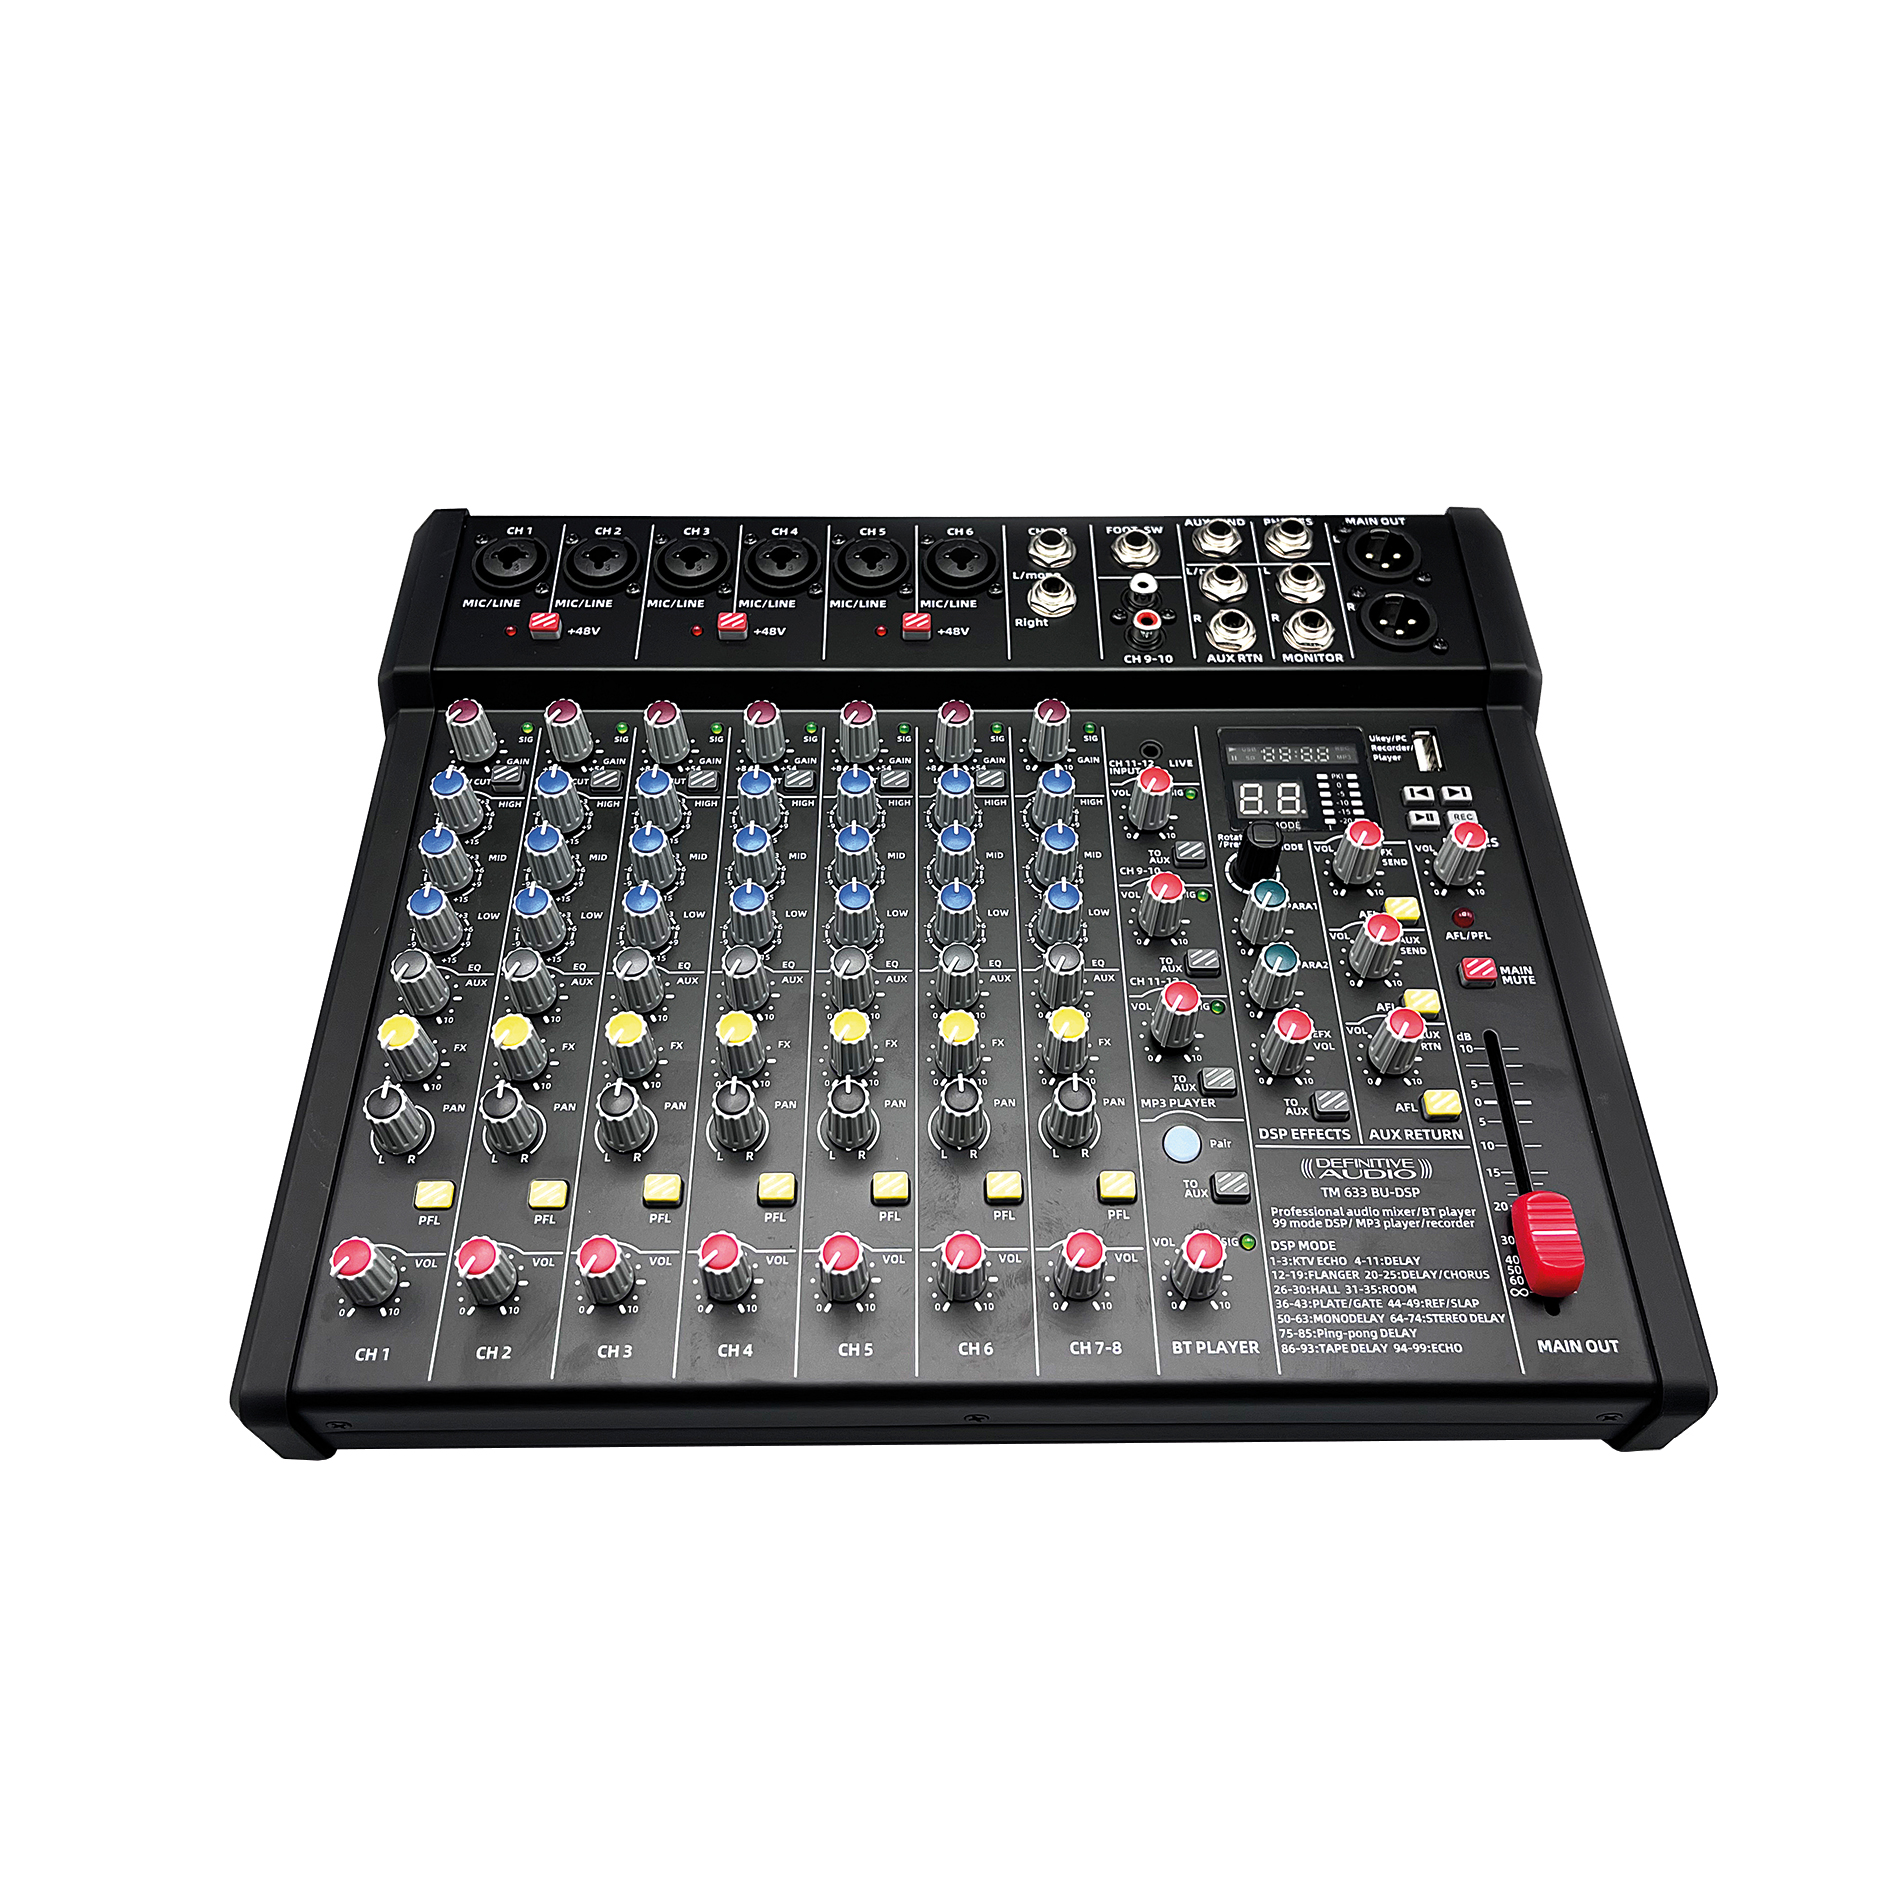 Definitive Audio Tm 633 Bu-dsp - Analog mixing desk - Variation 1